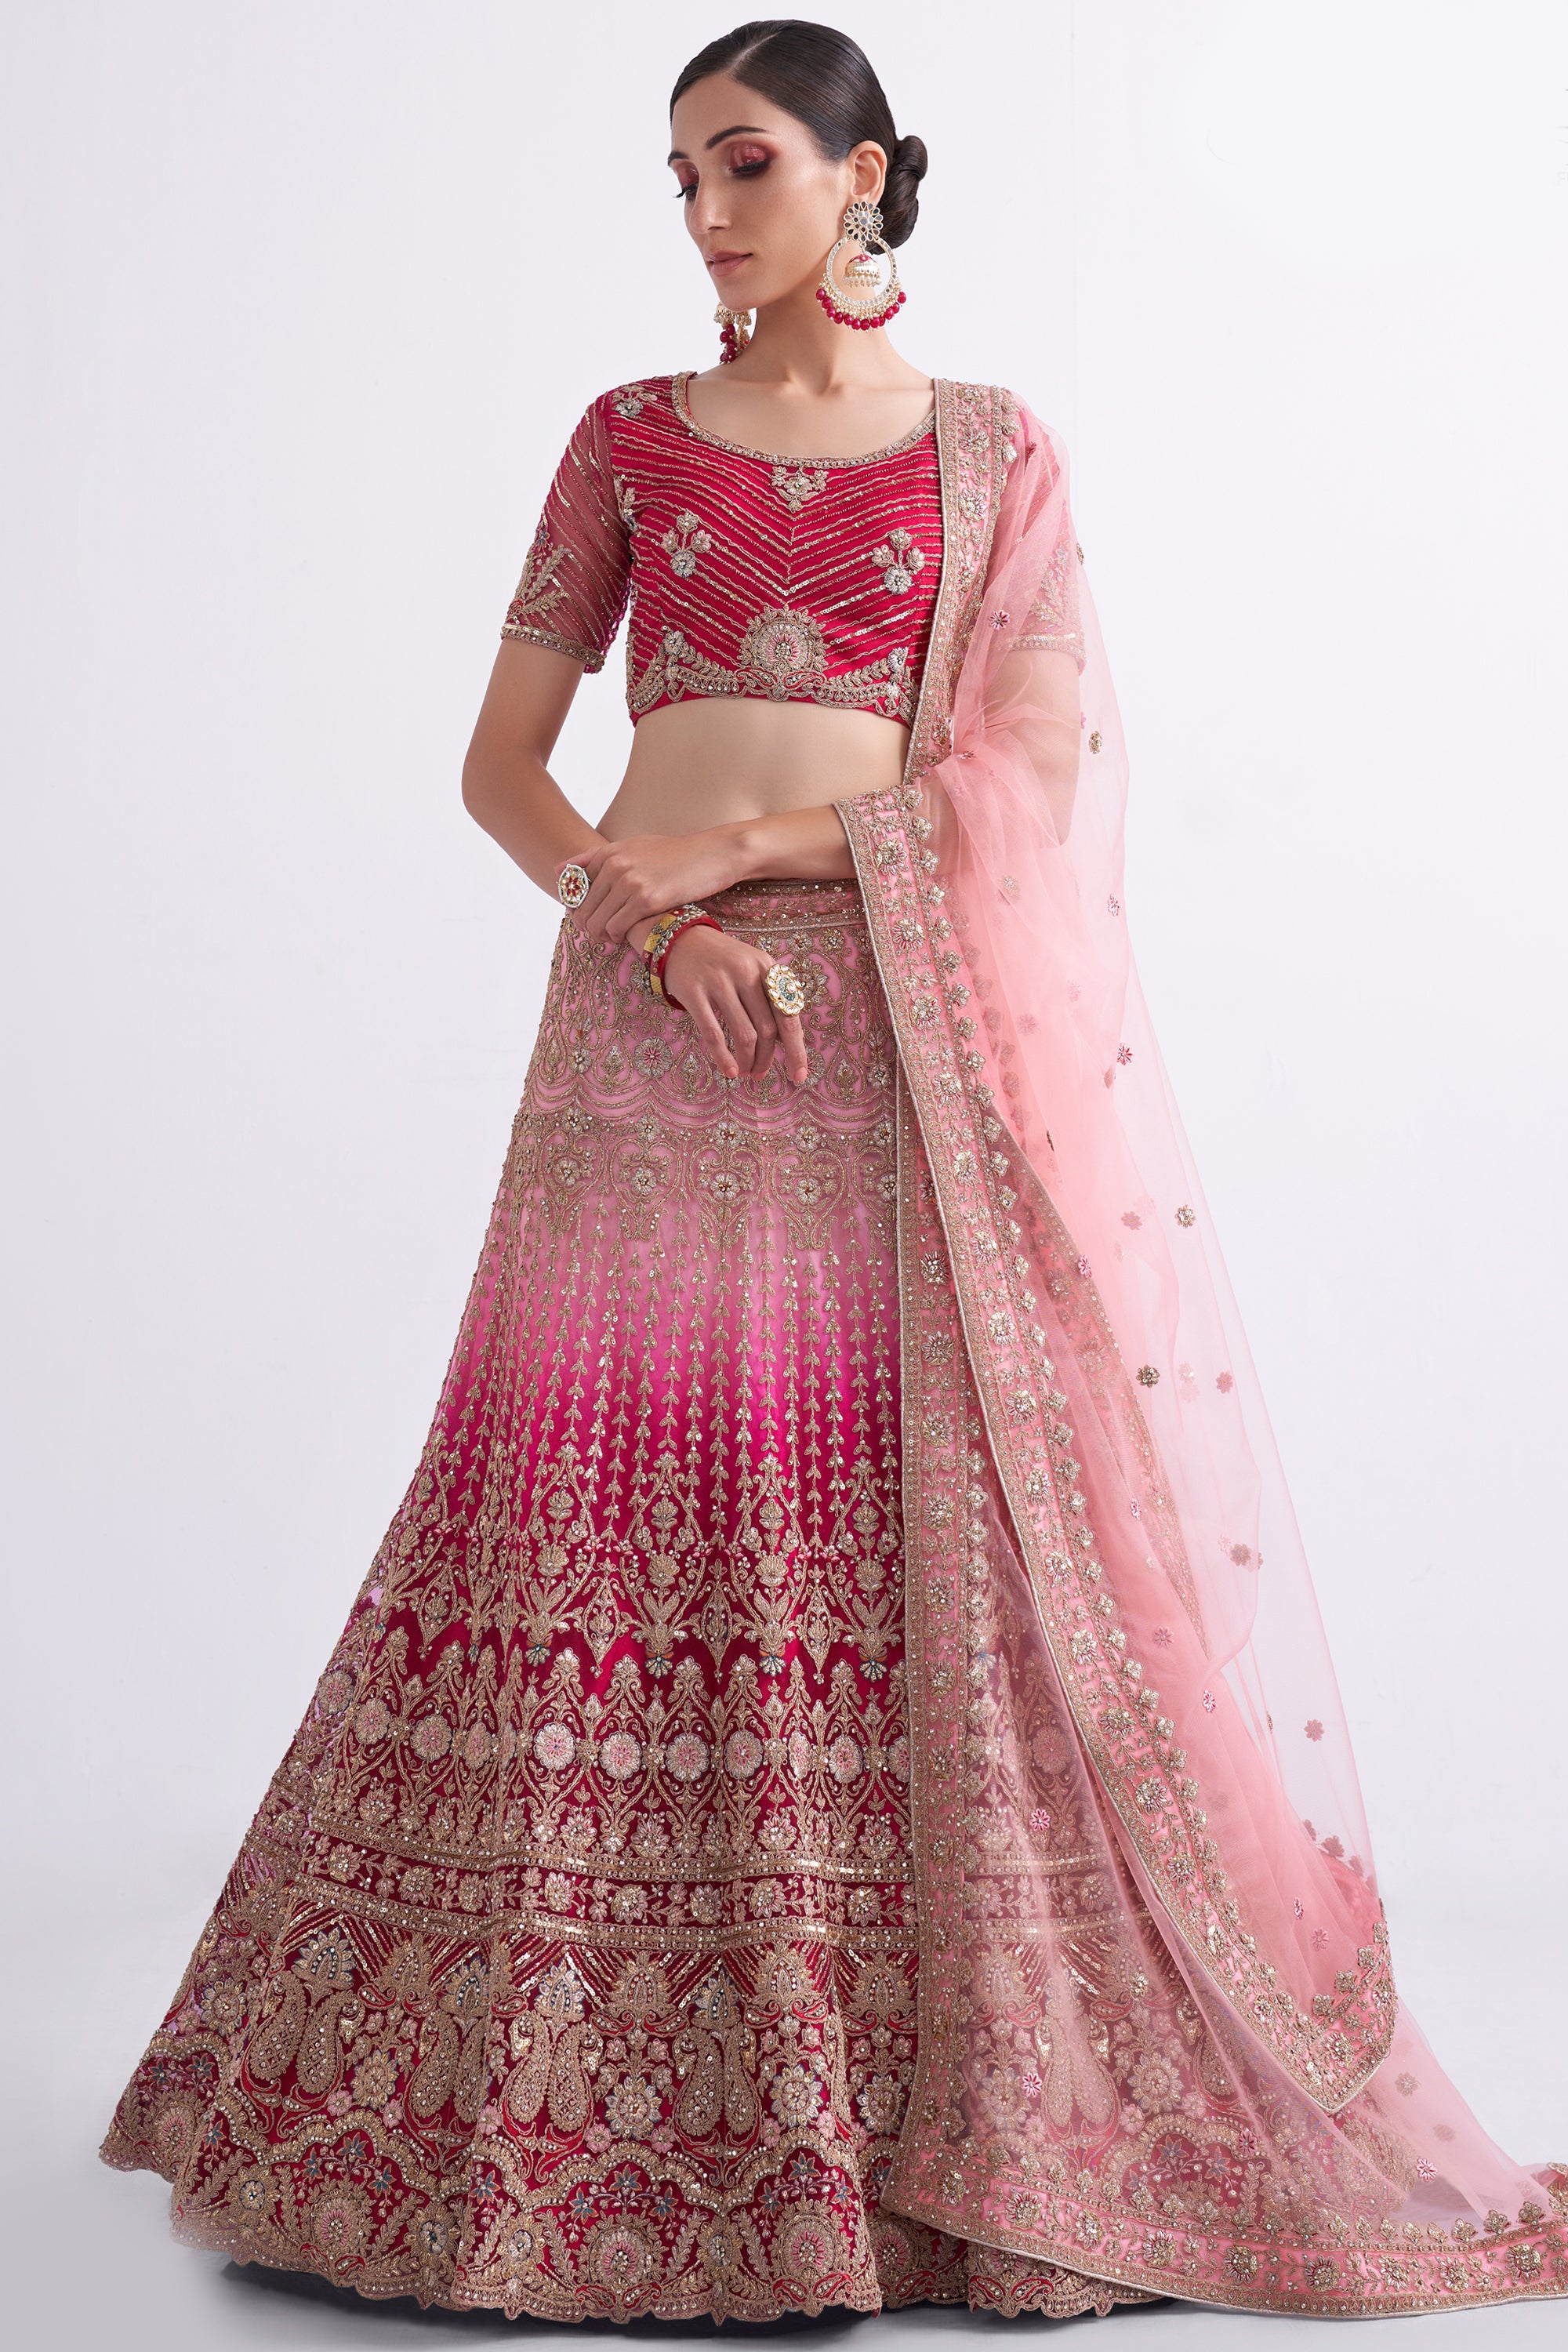 Women's Bridal Heritage Shaded Rani Heavy Embroidered Net Designer Lehenga - CHITRAS